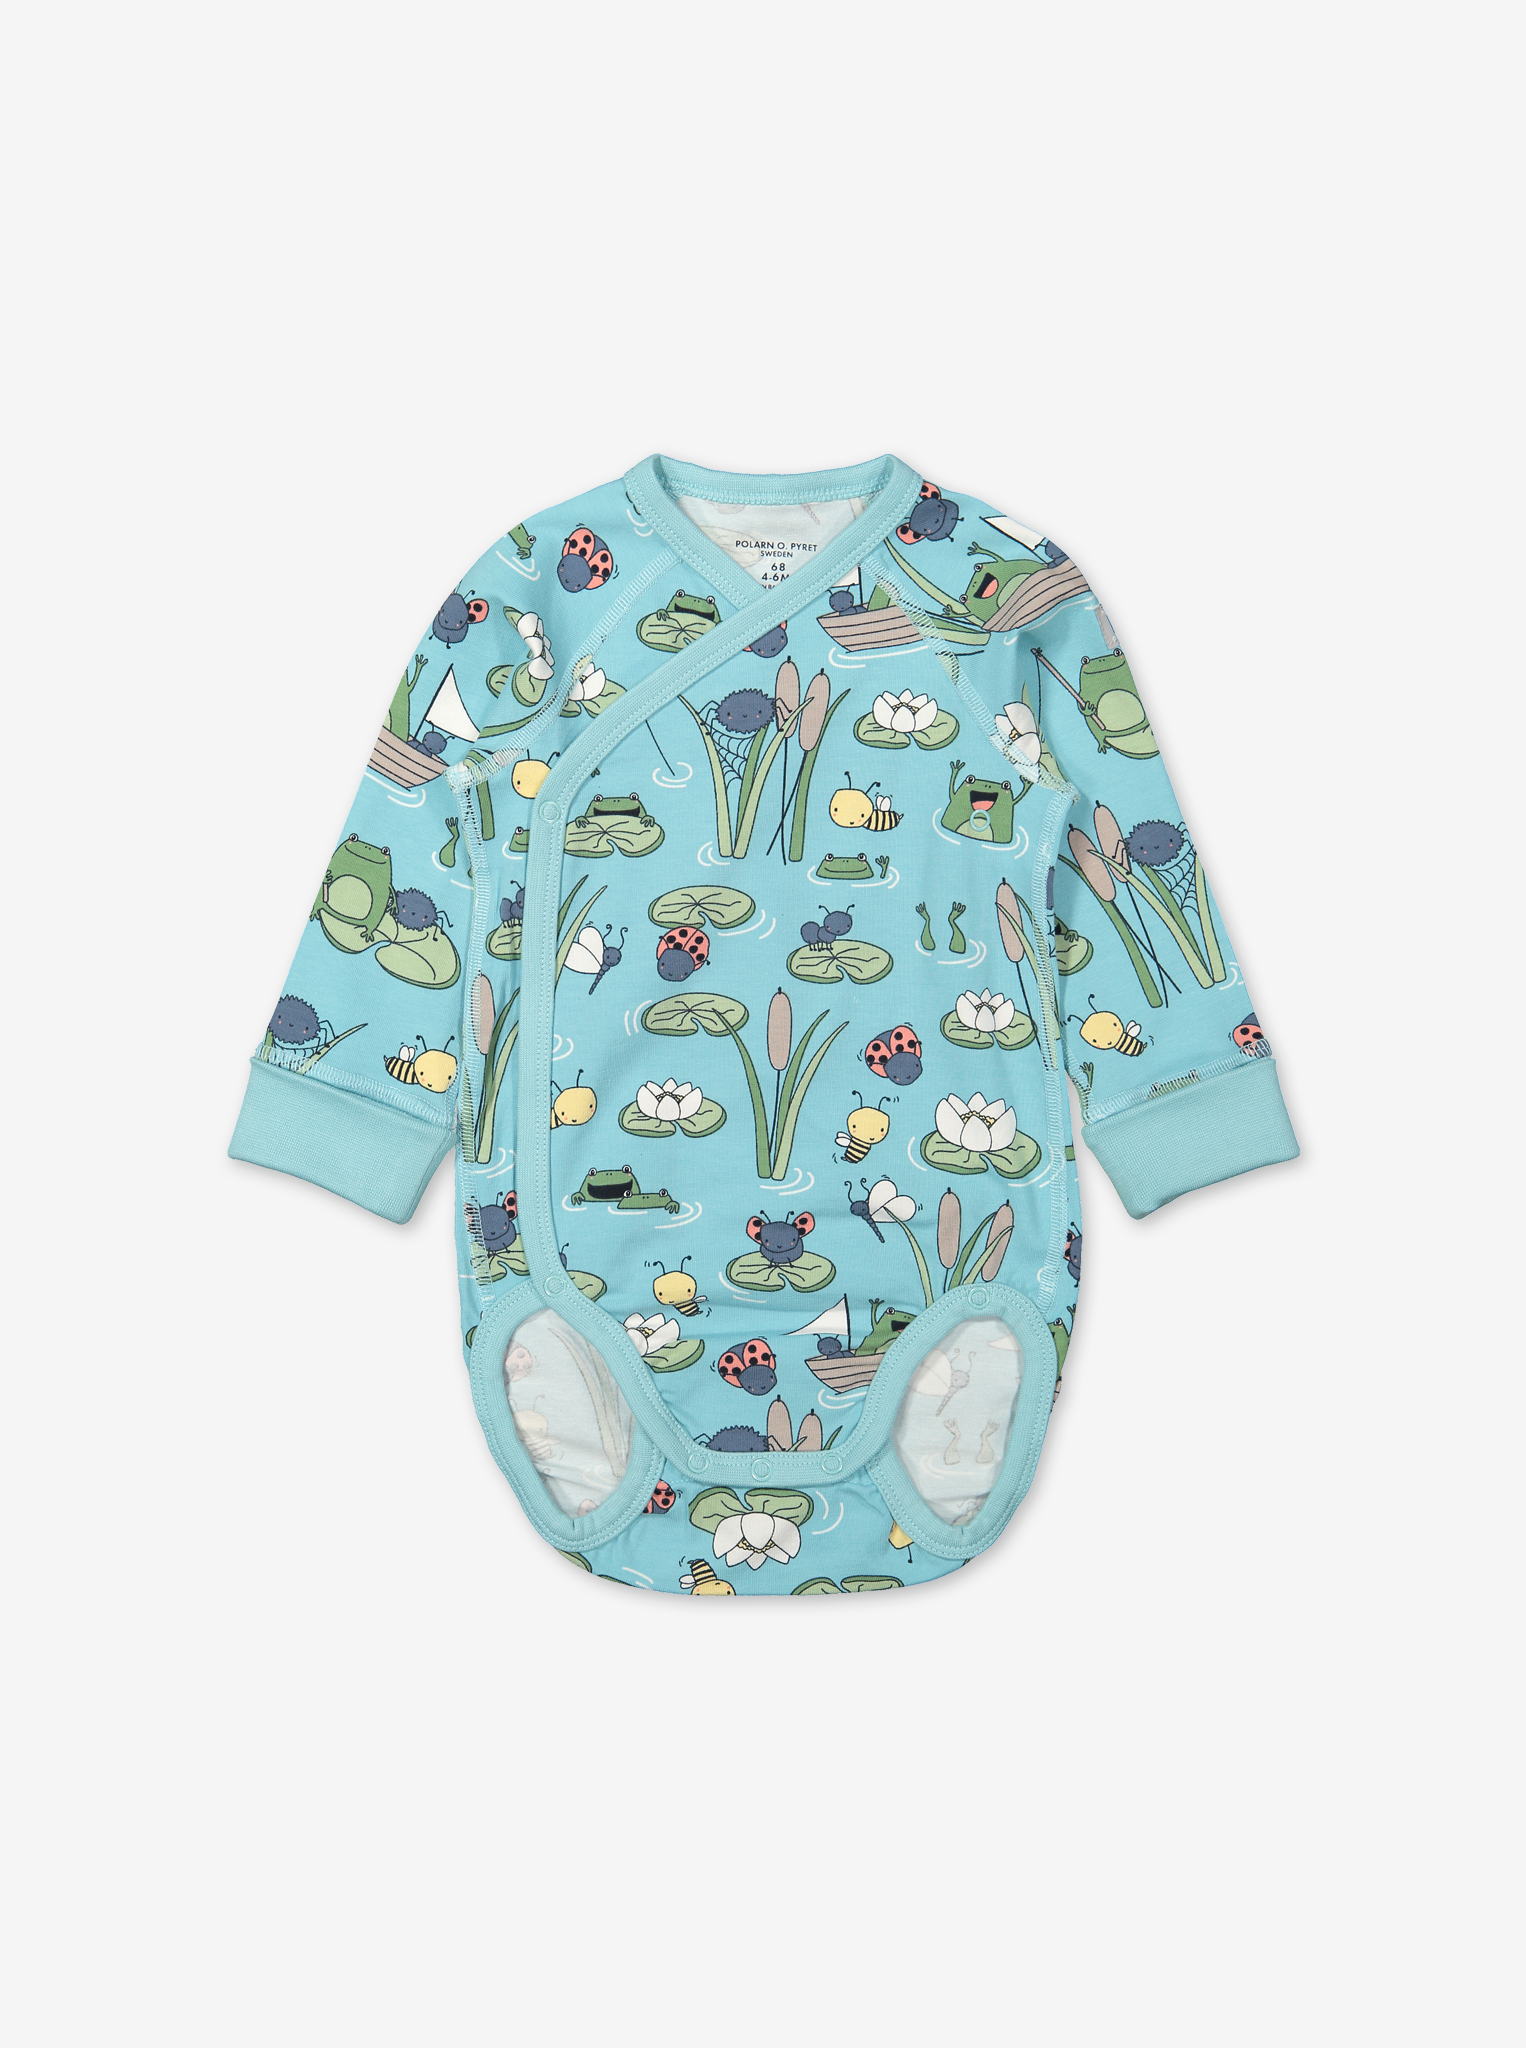 Pond Print Wraparound Baby Bodysuit-Unisex-0-6m-Turquoise